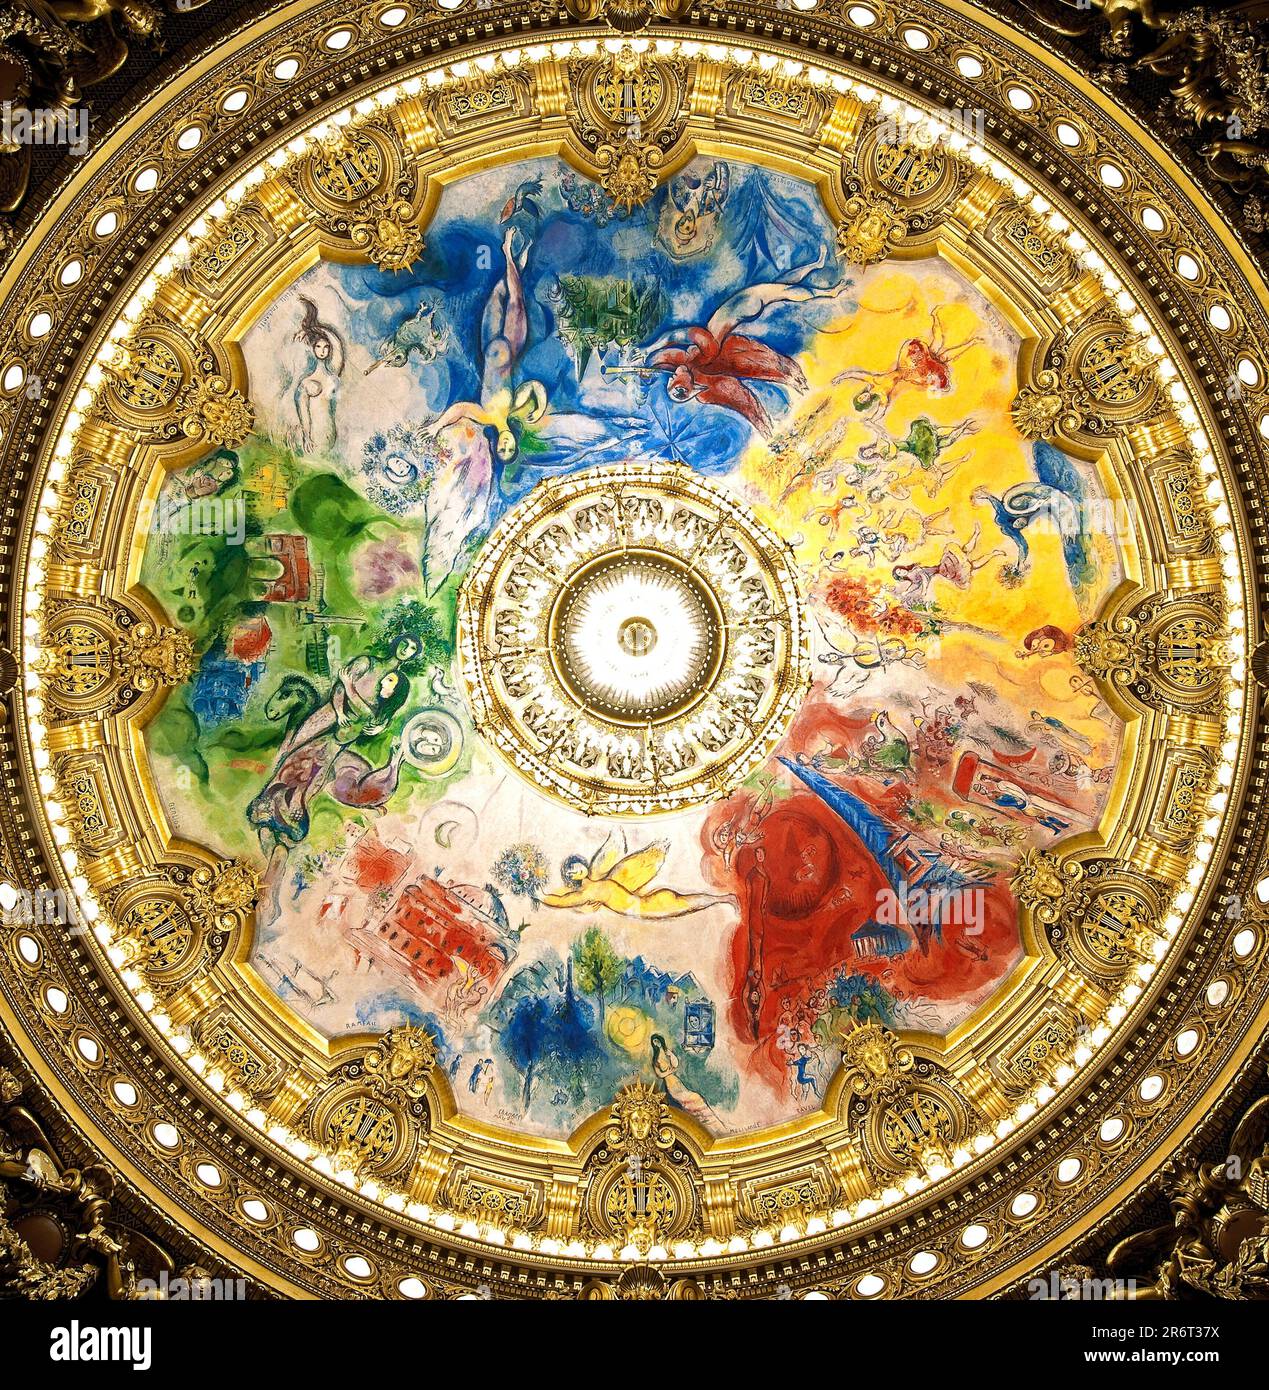 The Ceiling of the Opéra Garnier. Museum: OPERA GARNIER, PARIS. Author:  MARC CHAGALL Stock Photo - Alamy